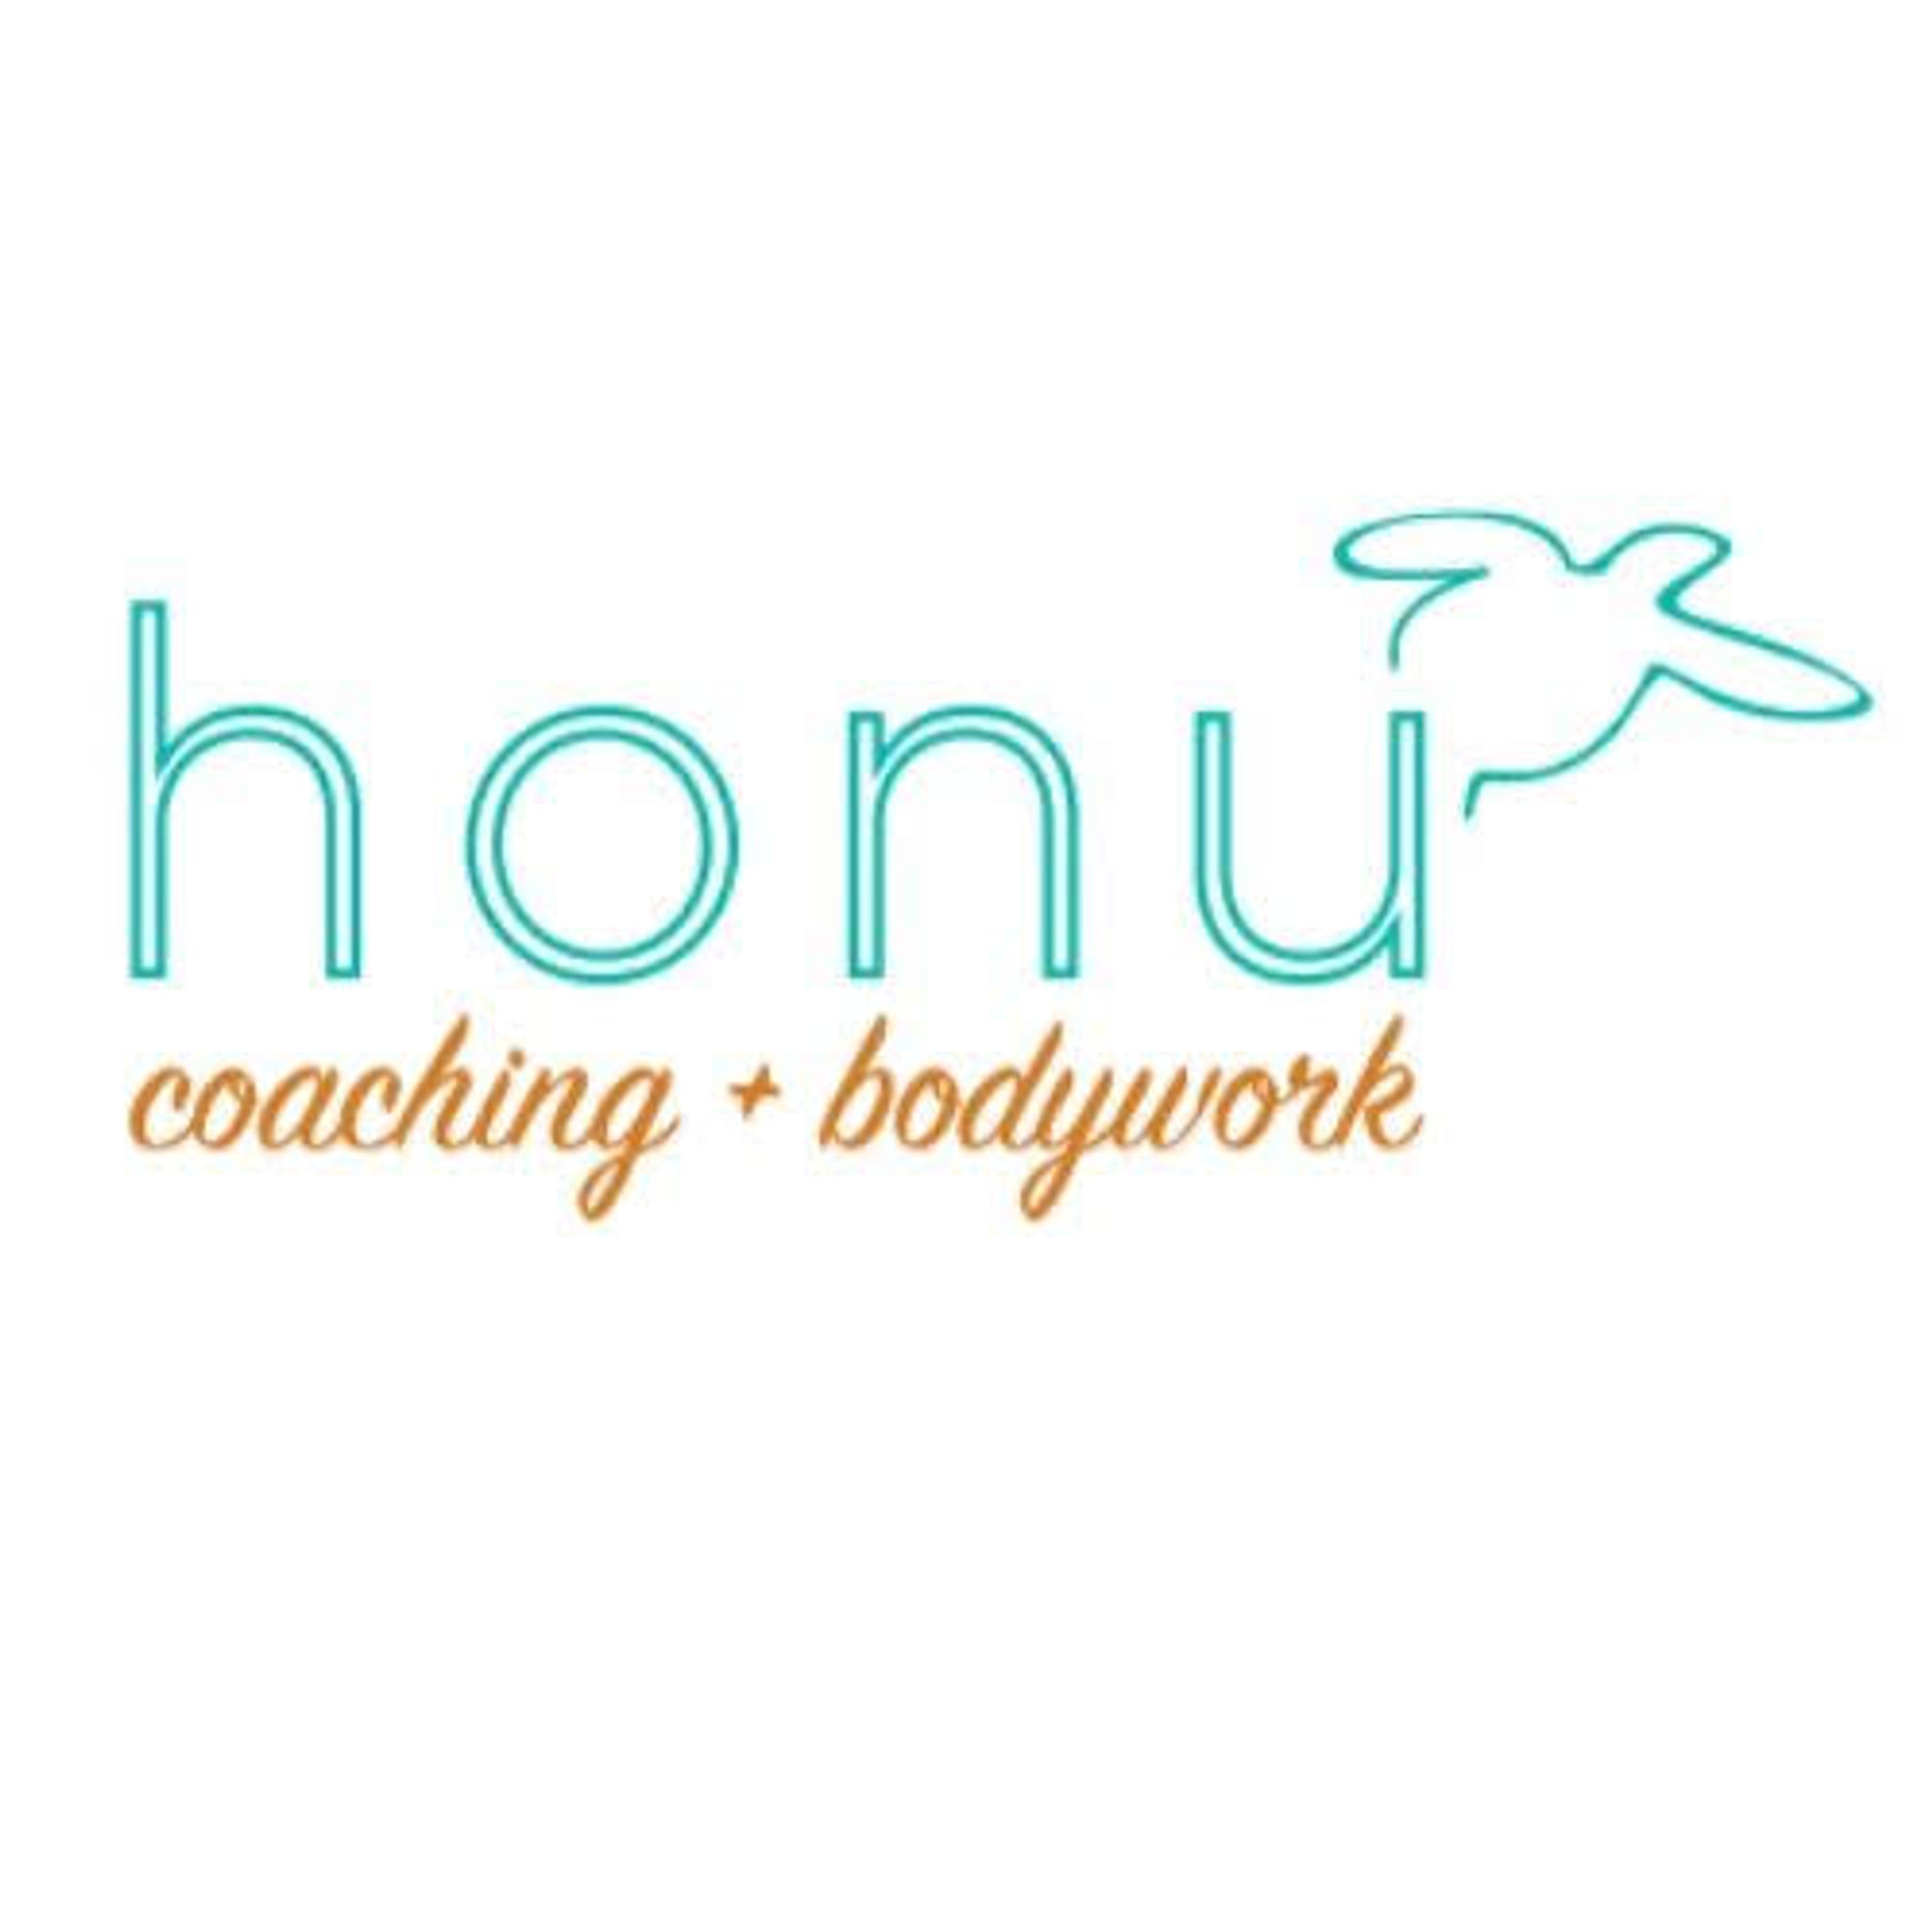 Honu Coaching + Bodywork